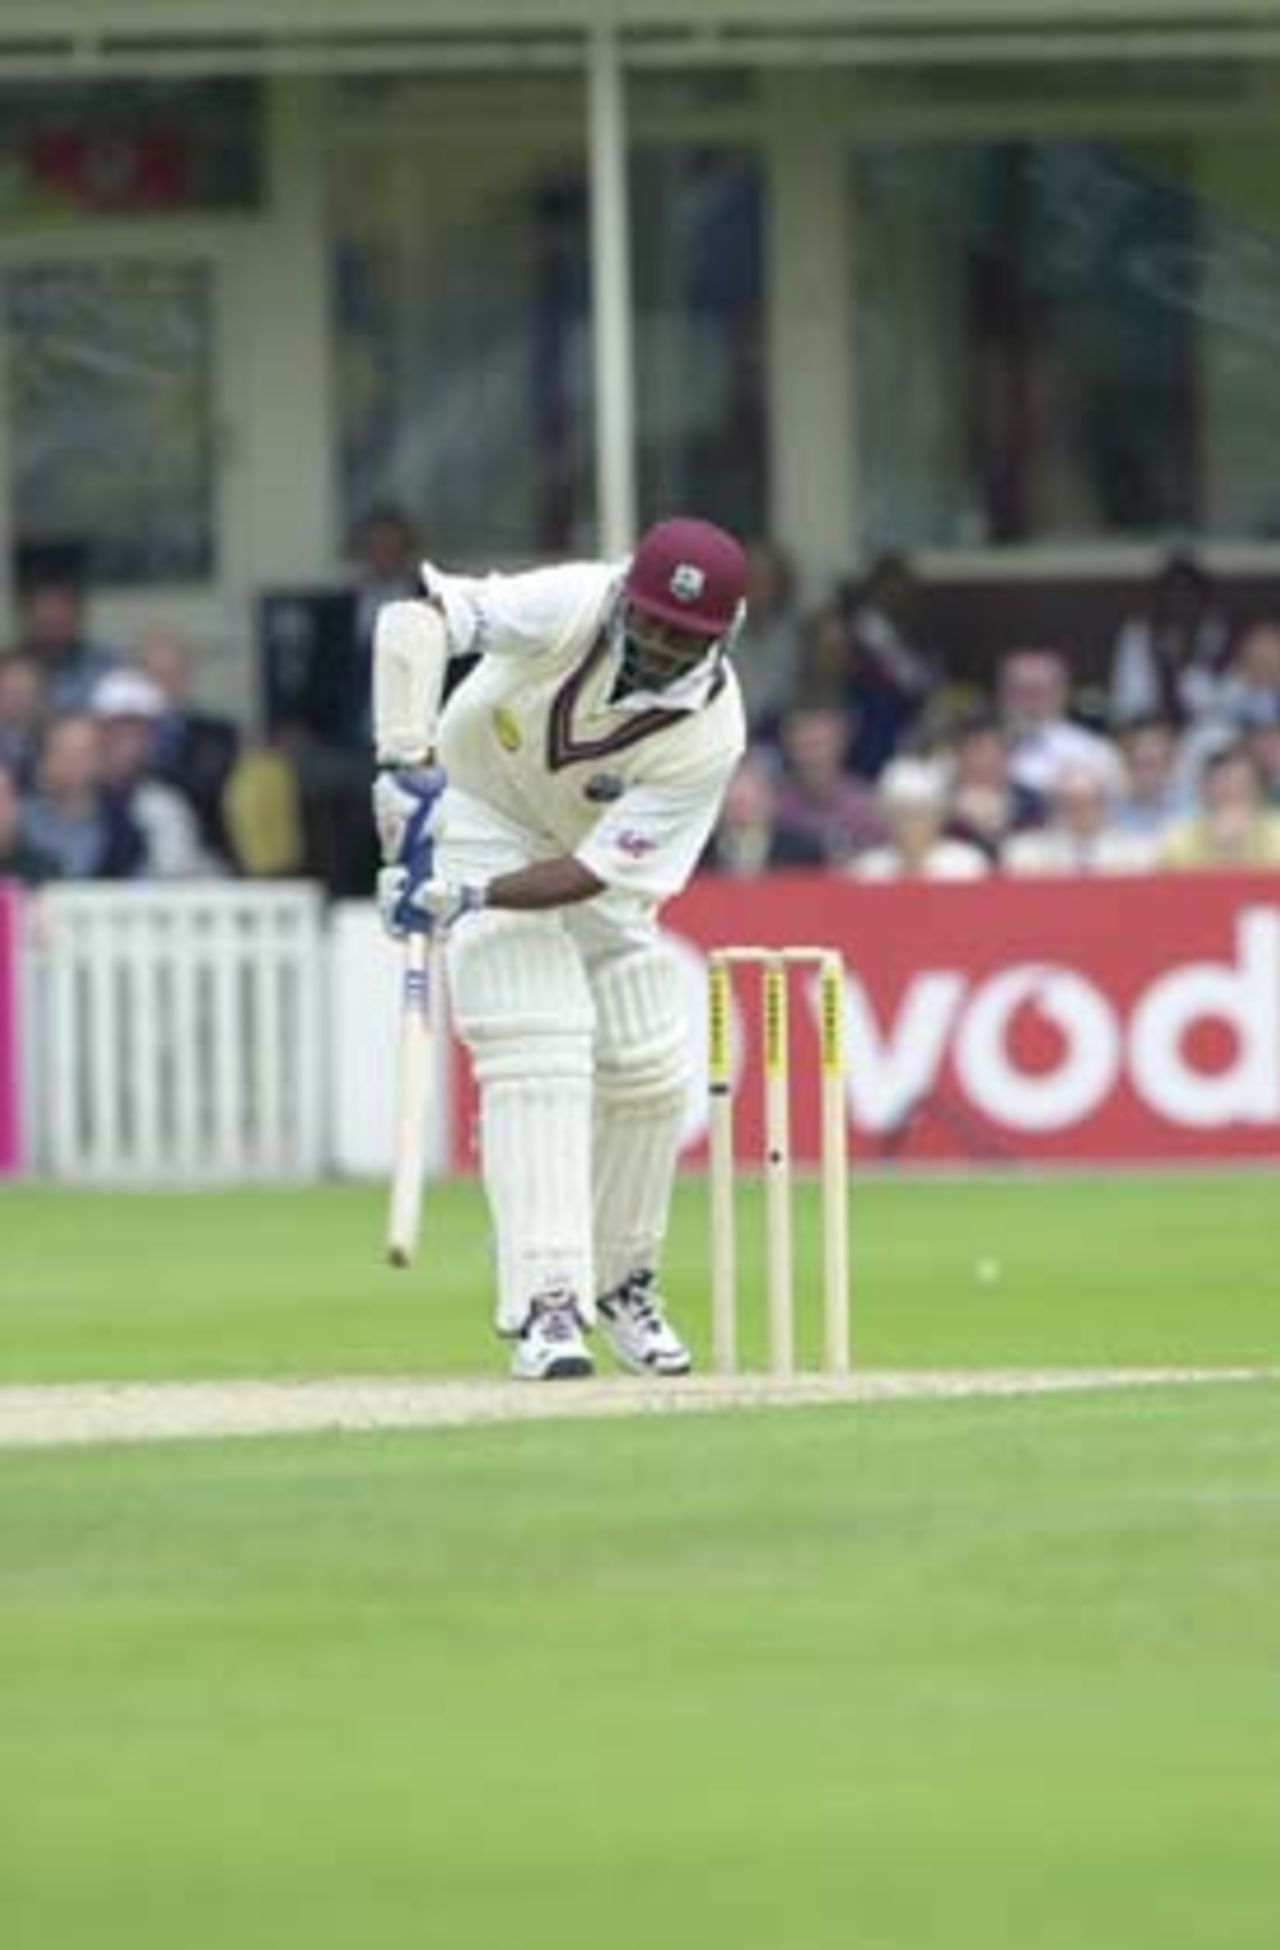 In the Birmingham Test 2000 v England